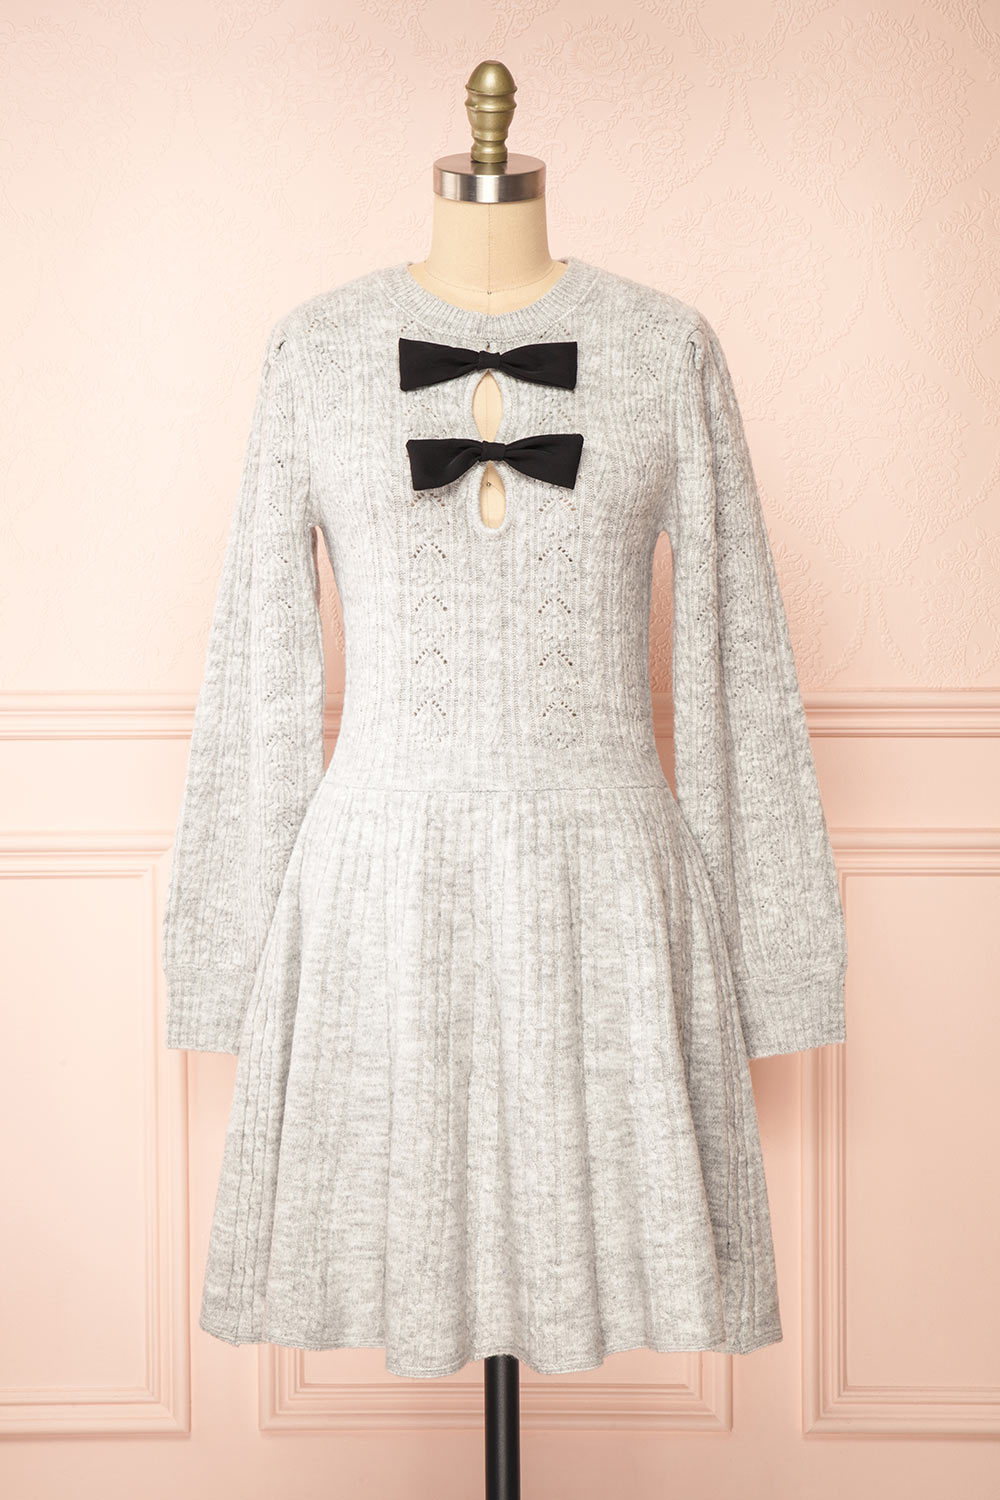 Calandra Short Grey Wool Dress w/ Black Bows | Boutique 1861 front view